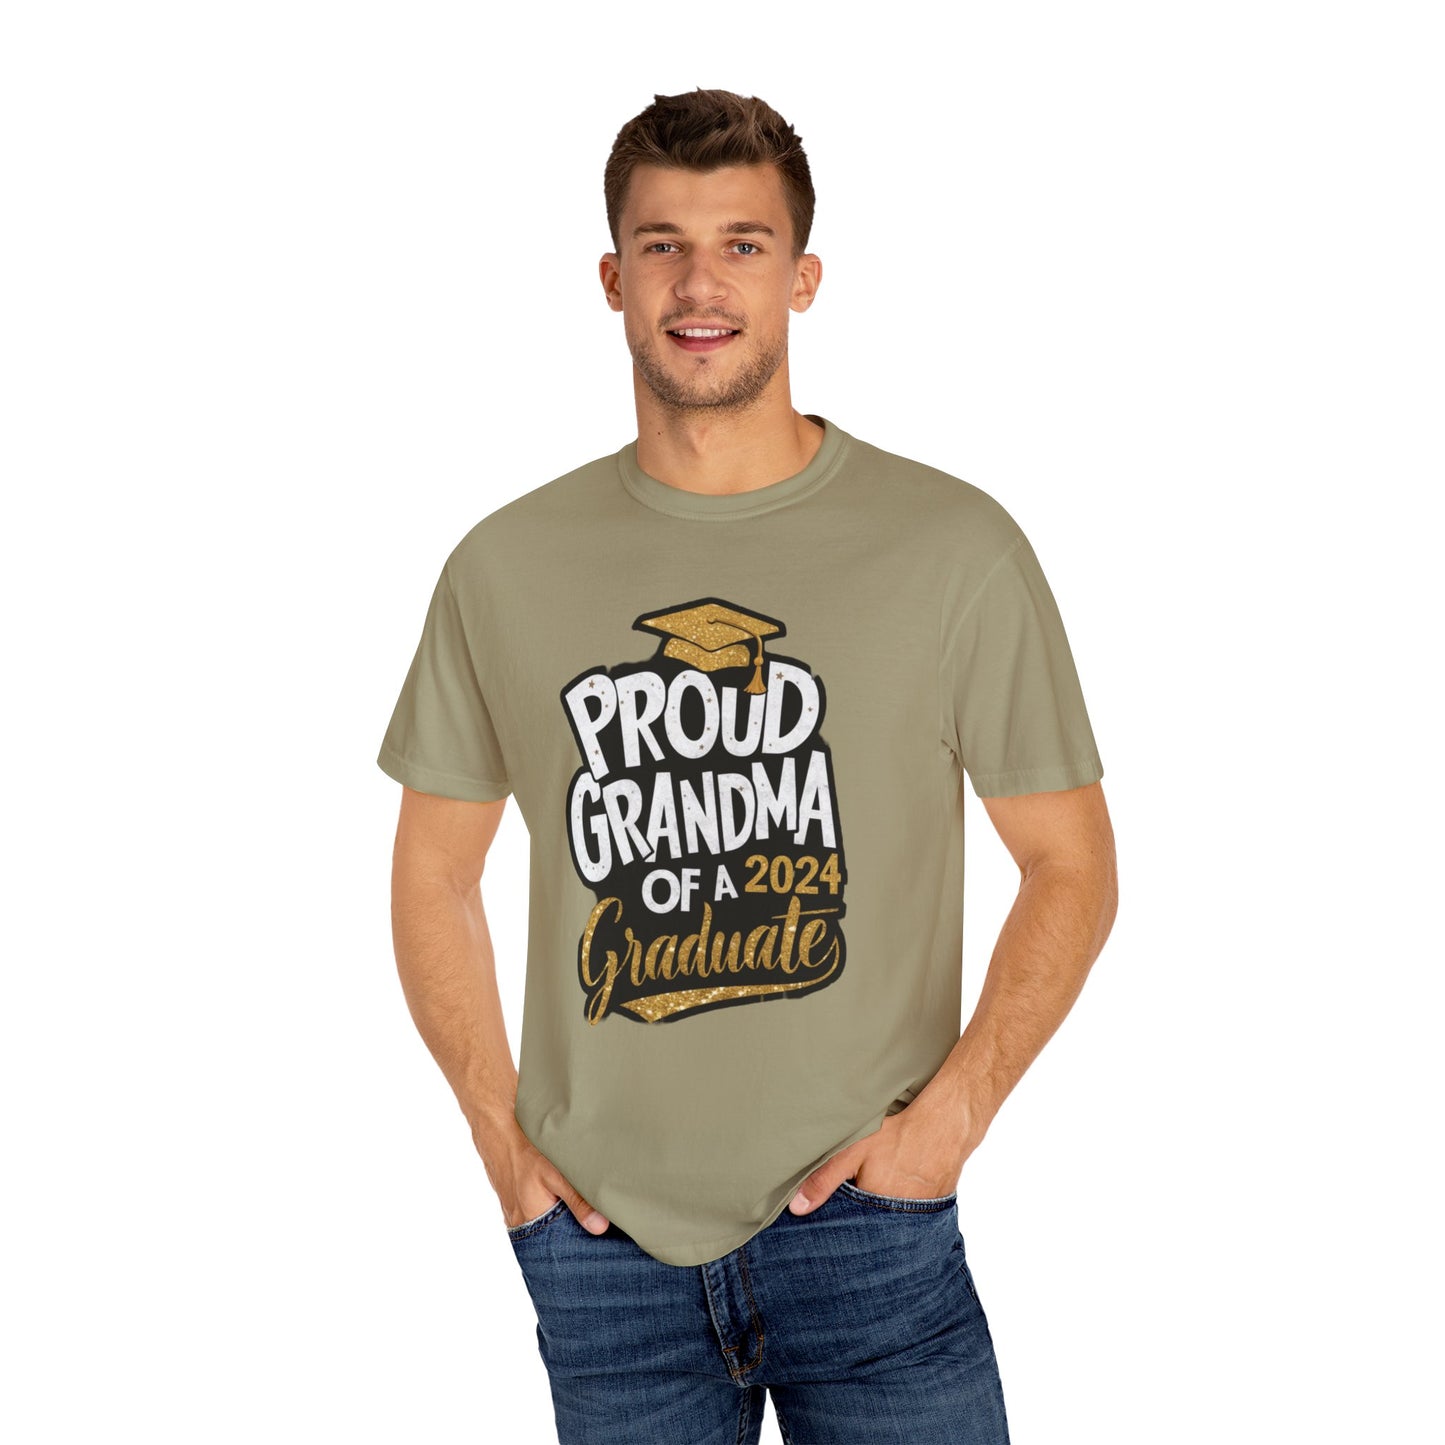 Proud of Grandma 2024 Graduate Unisex Garment-dyed T-shirt Cotton Funny Humorous Graphic Soft Premium Unisex Men Women Khaki T-shirt Birthday Gift-48